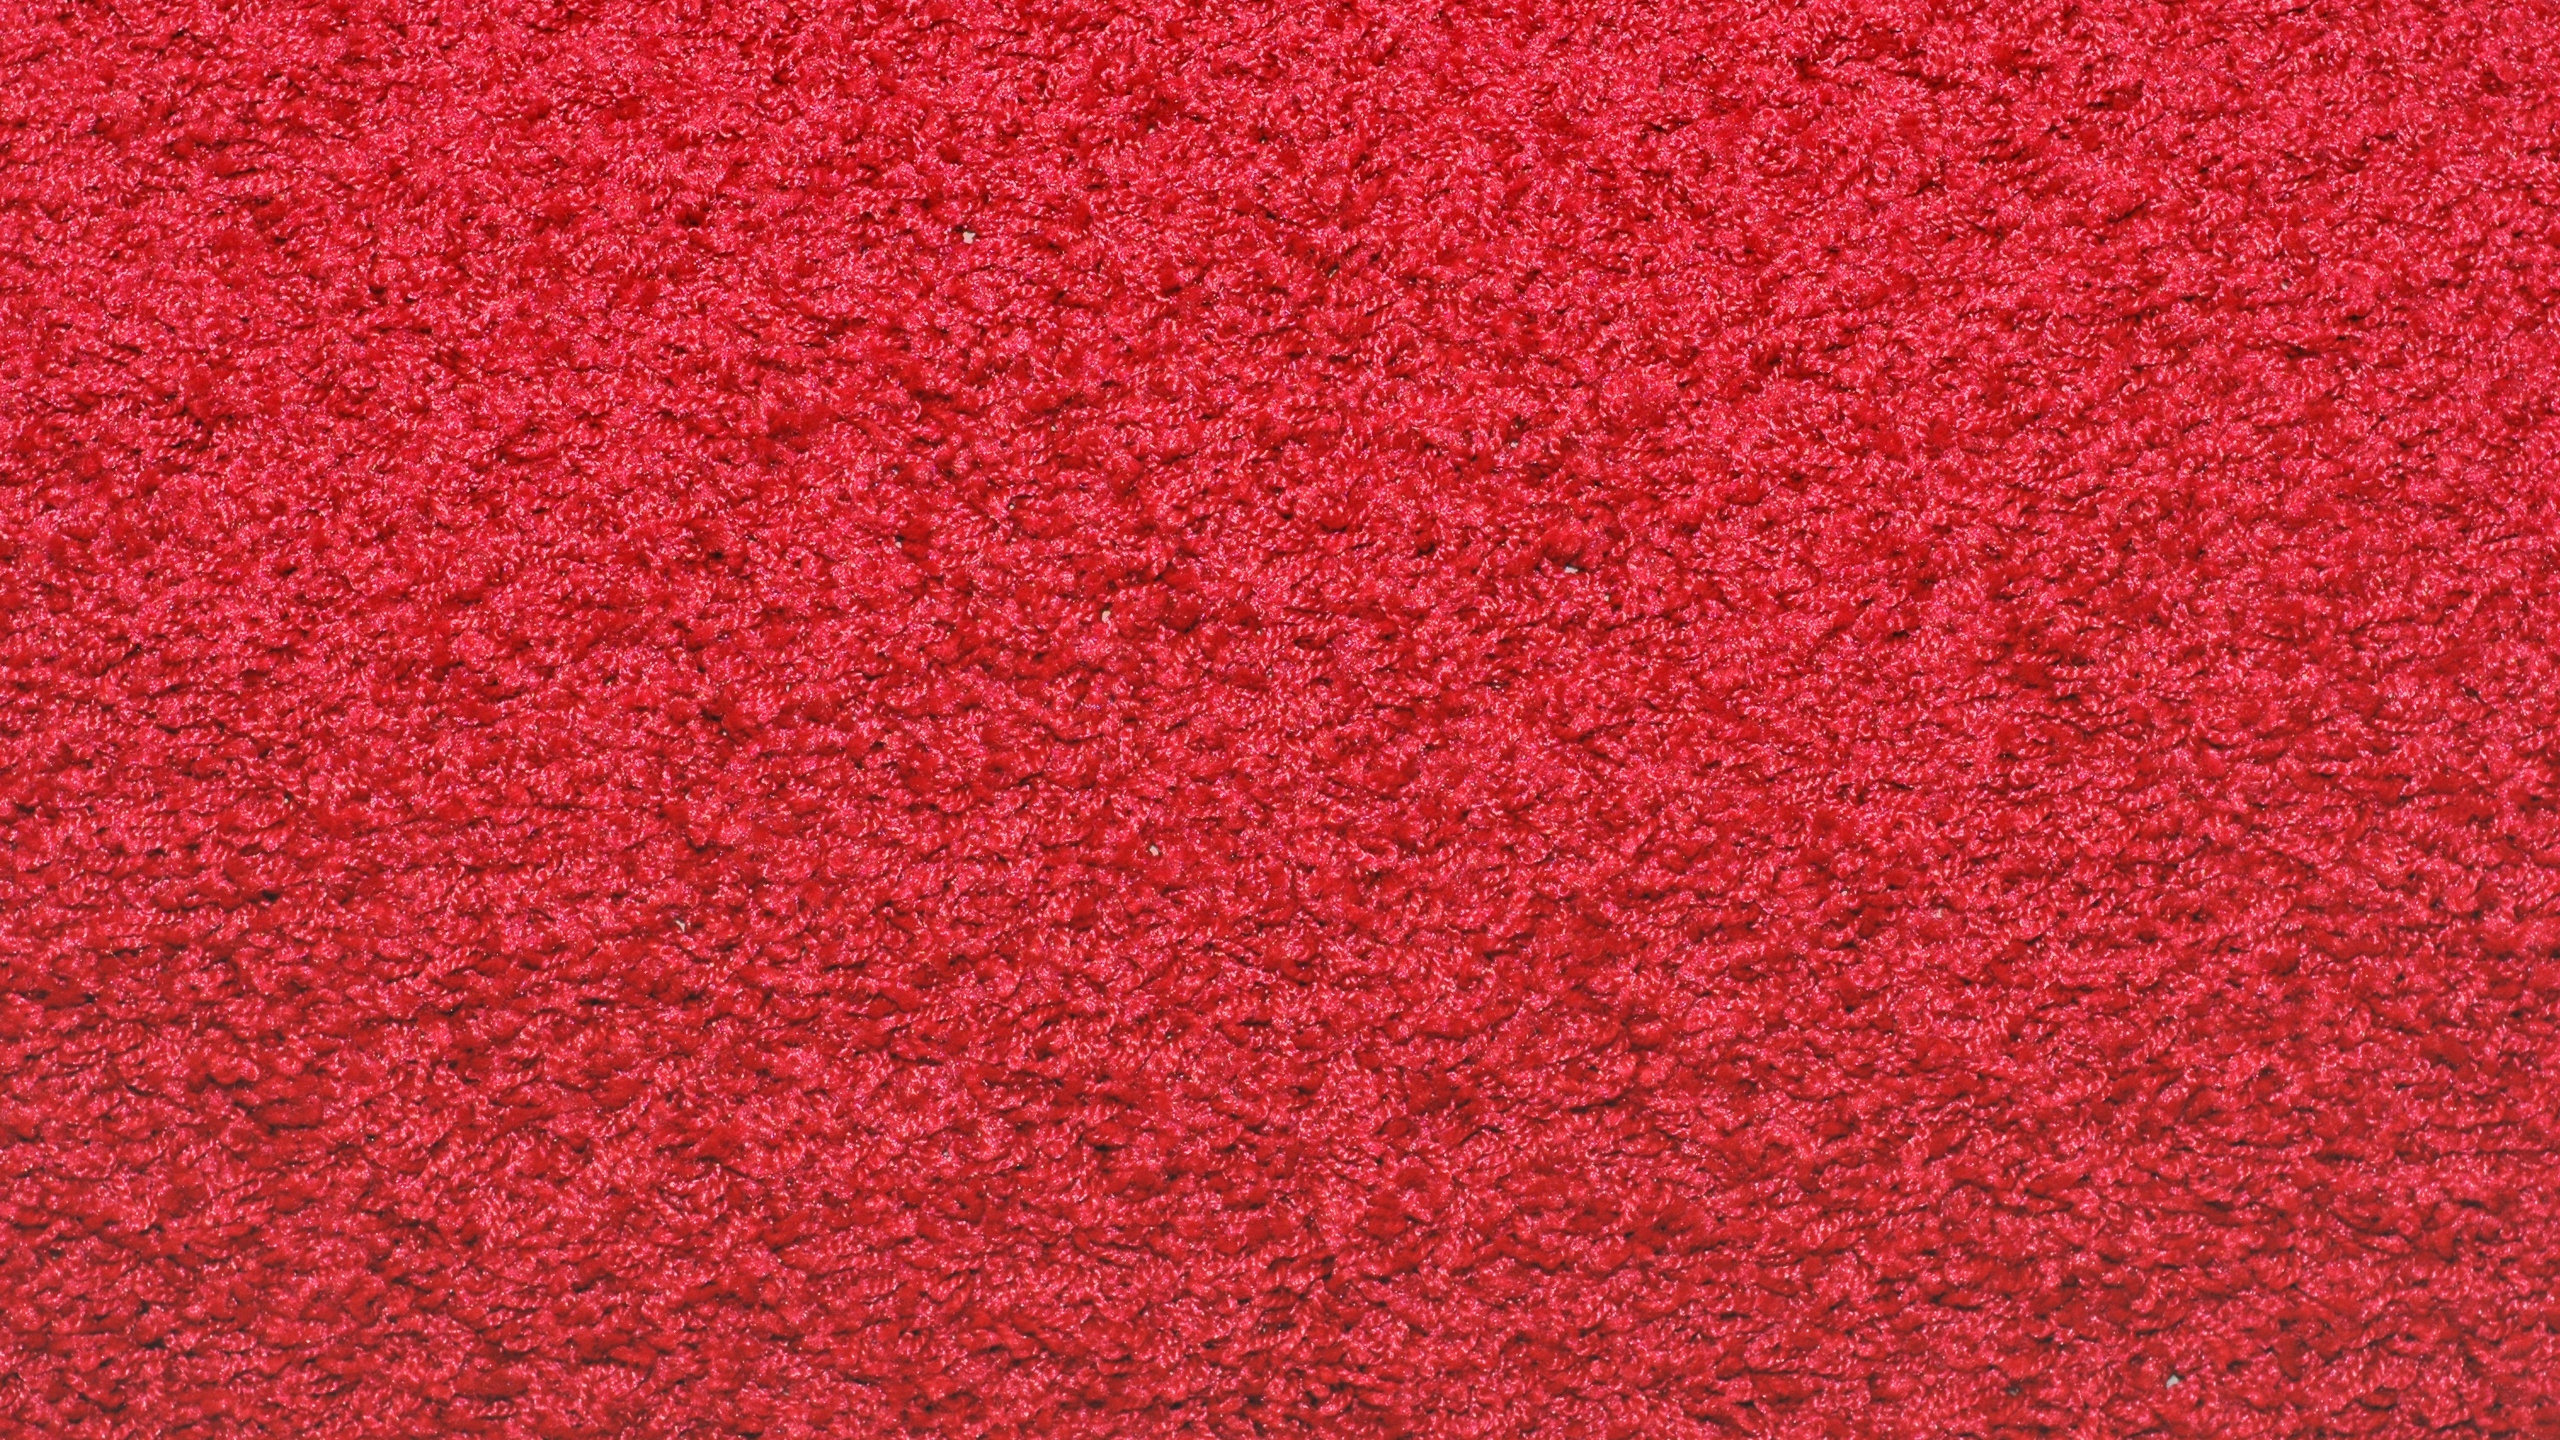 Red Carpet Wallpaper Image Group